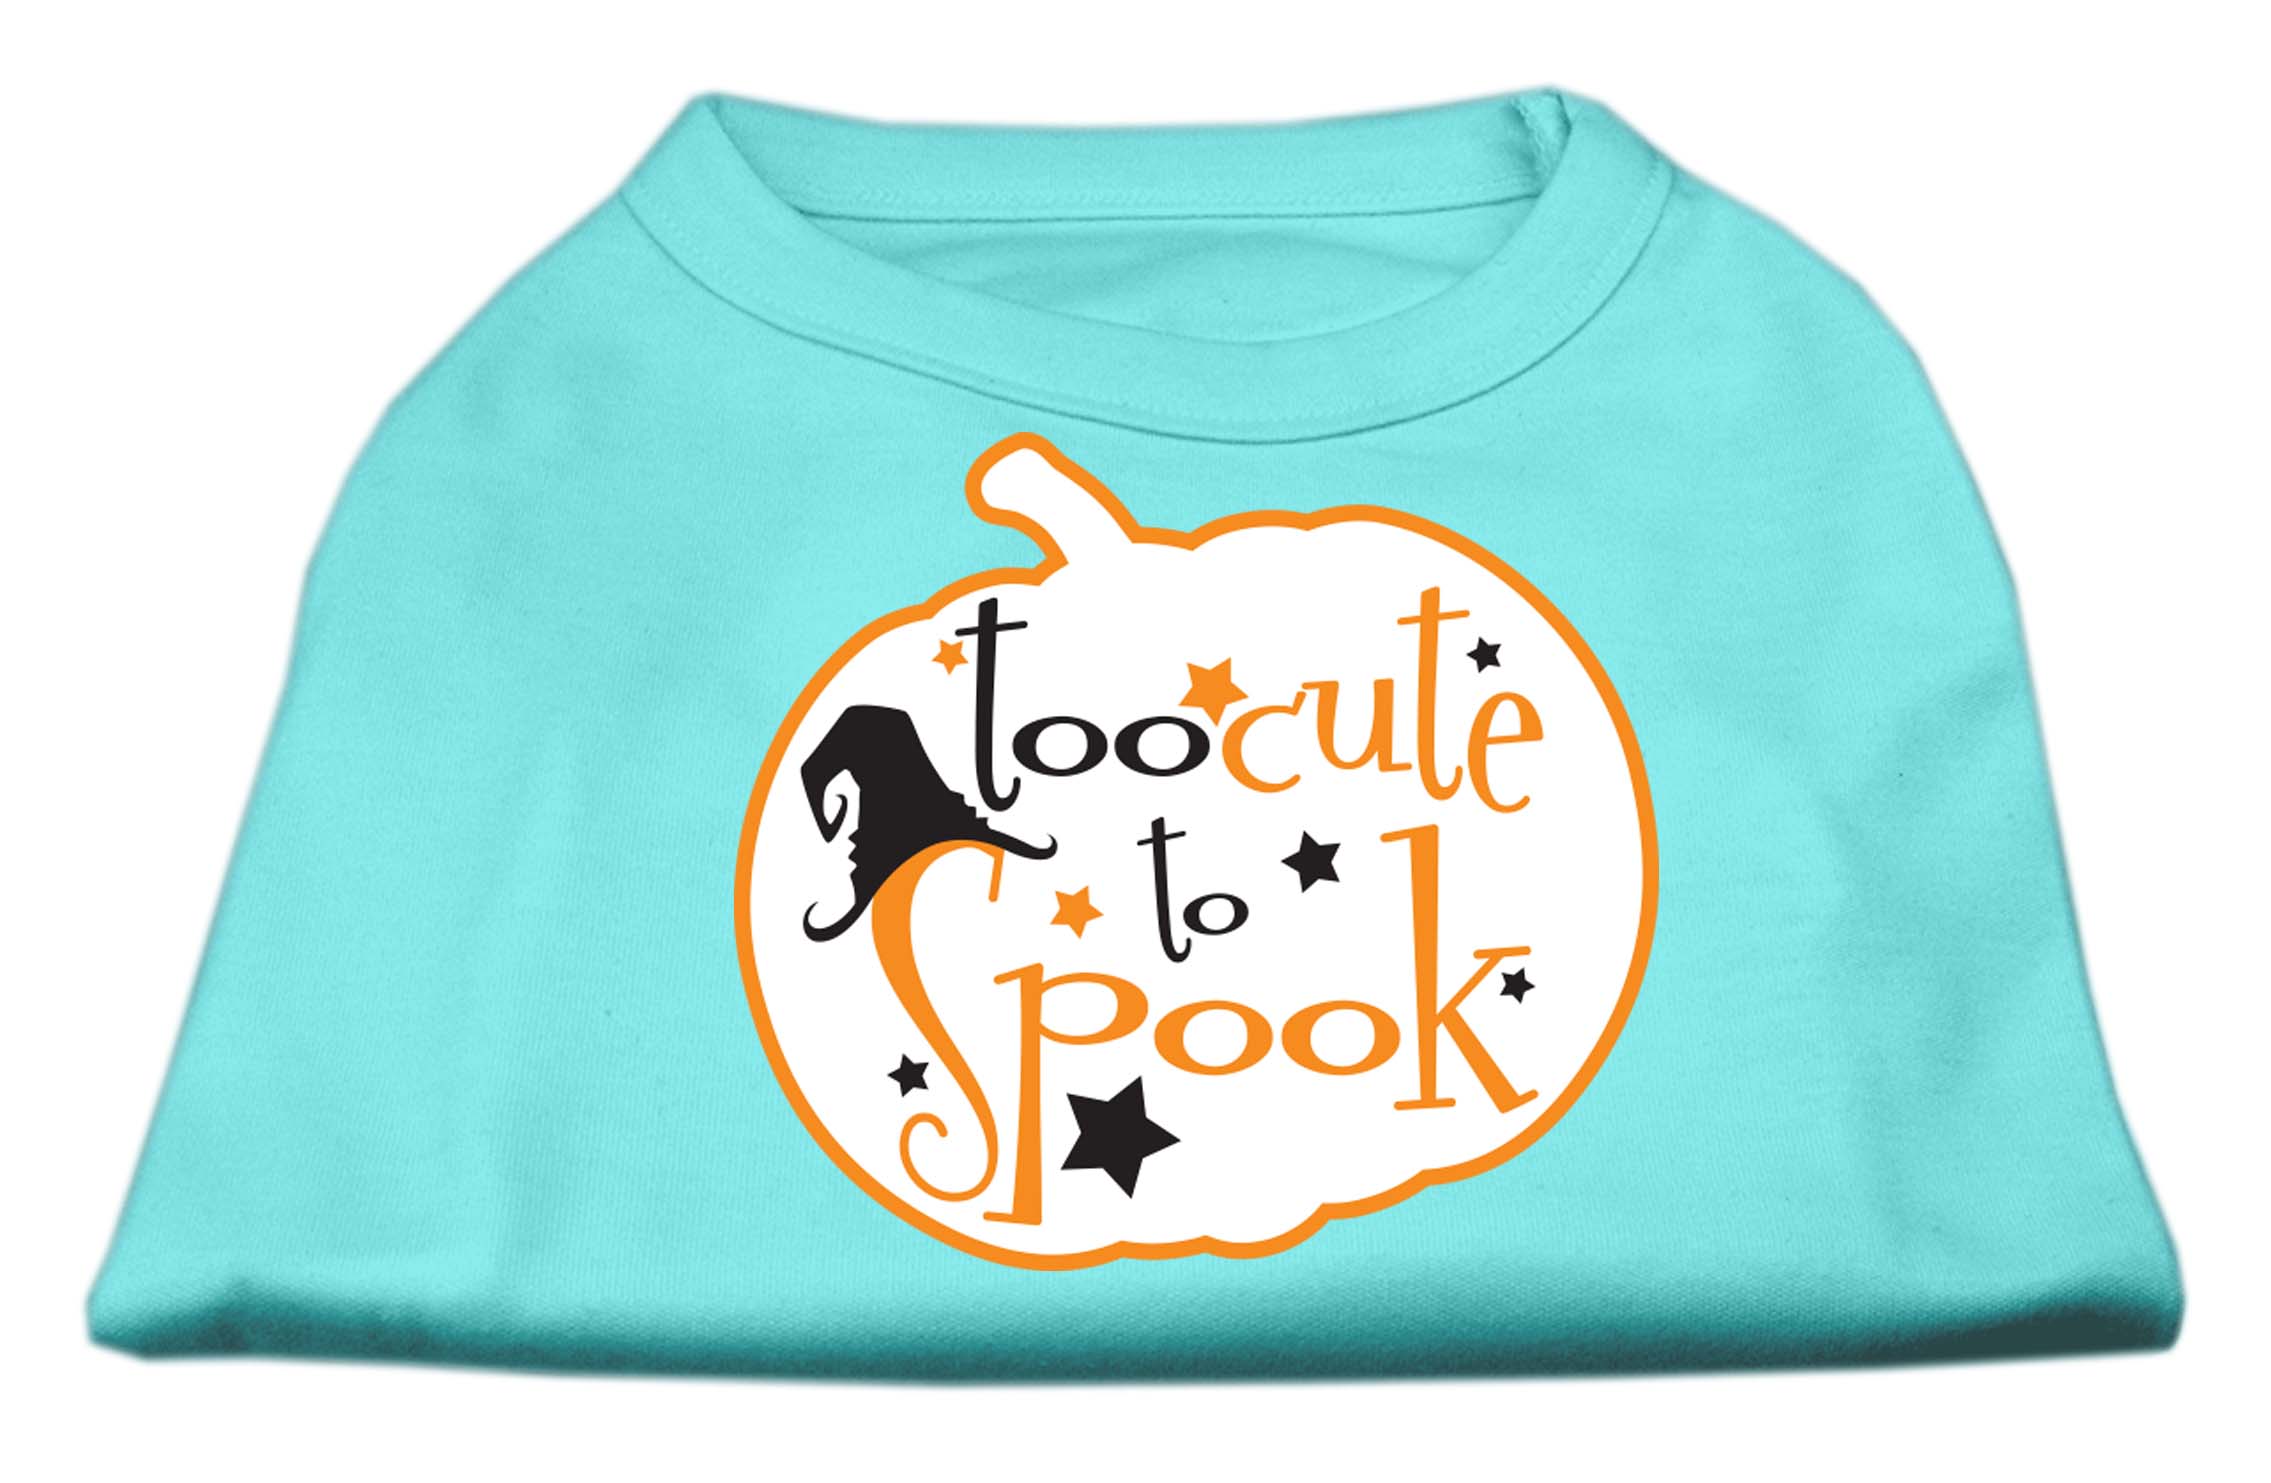 Too Cute to Spook Screen Print Dog Shirt Aqua XS